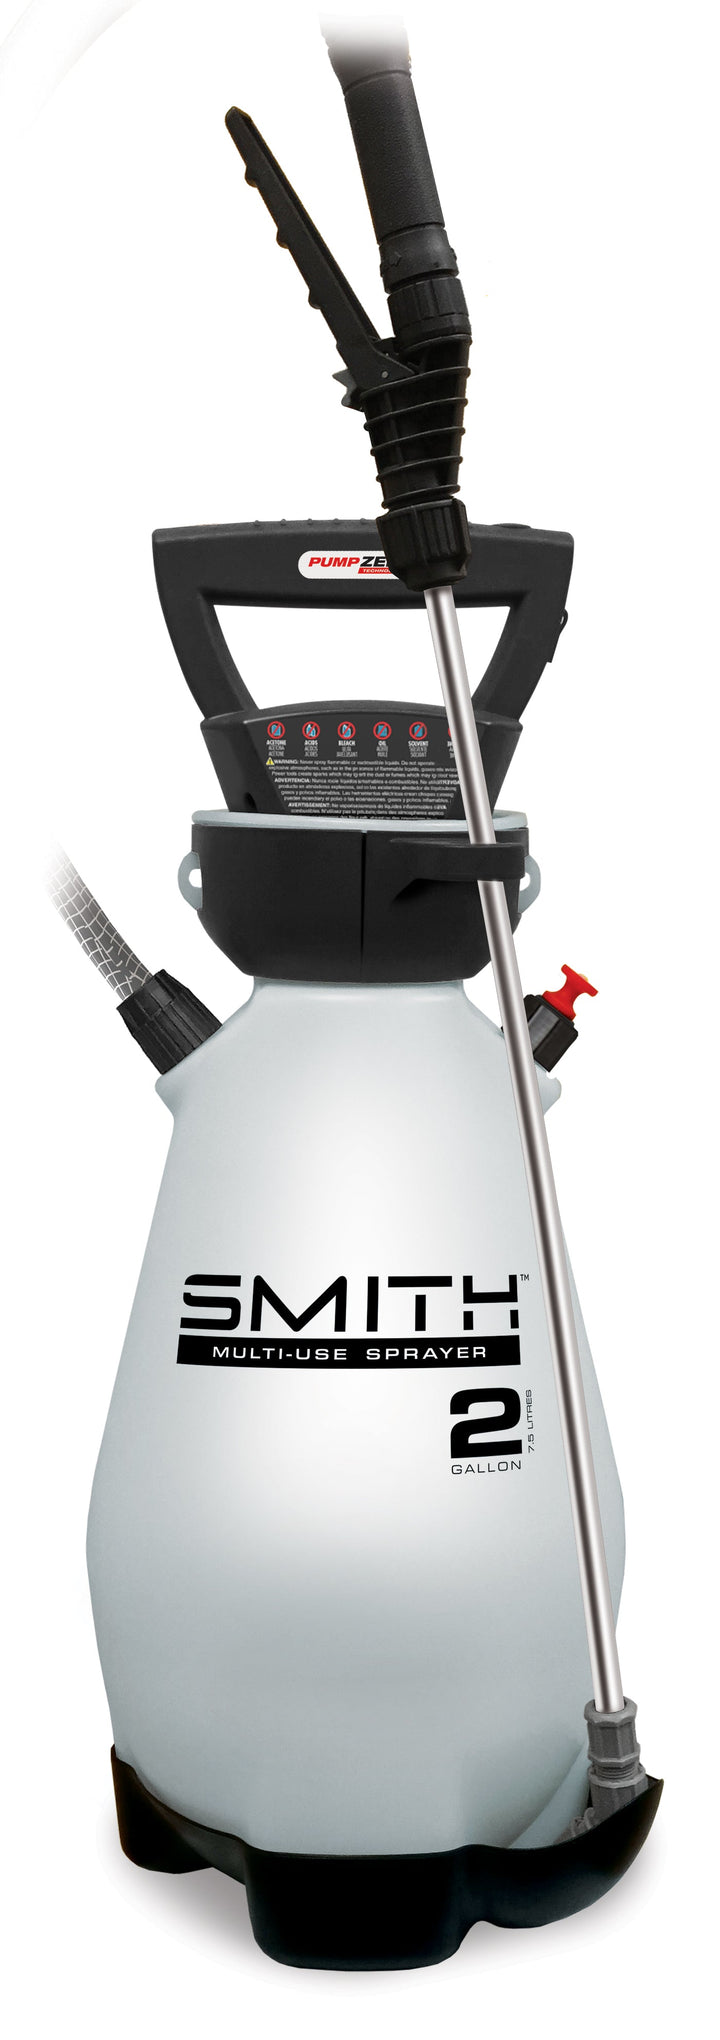 Smith Multi-Use Battery Powered Sprayer 2 Gallon